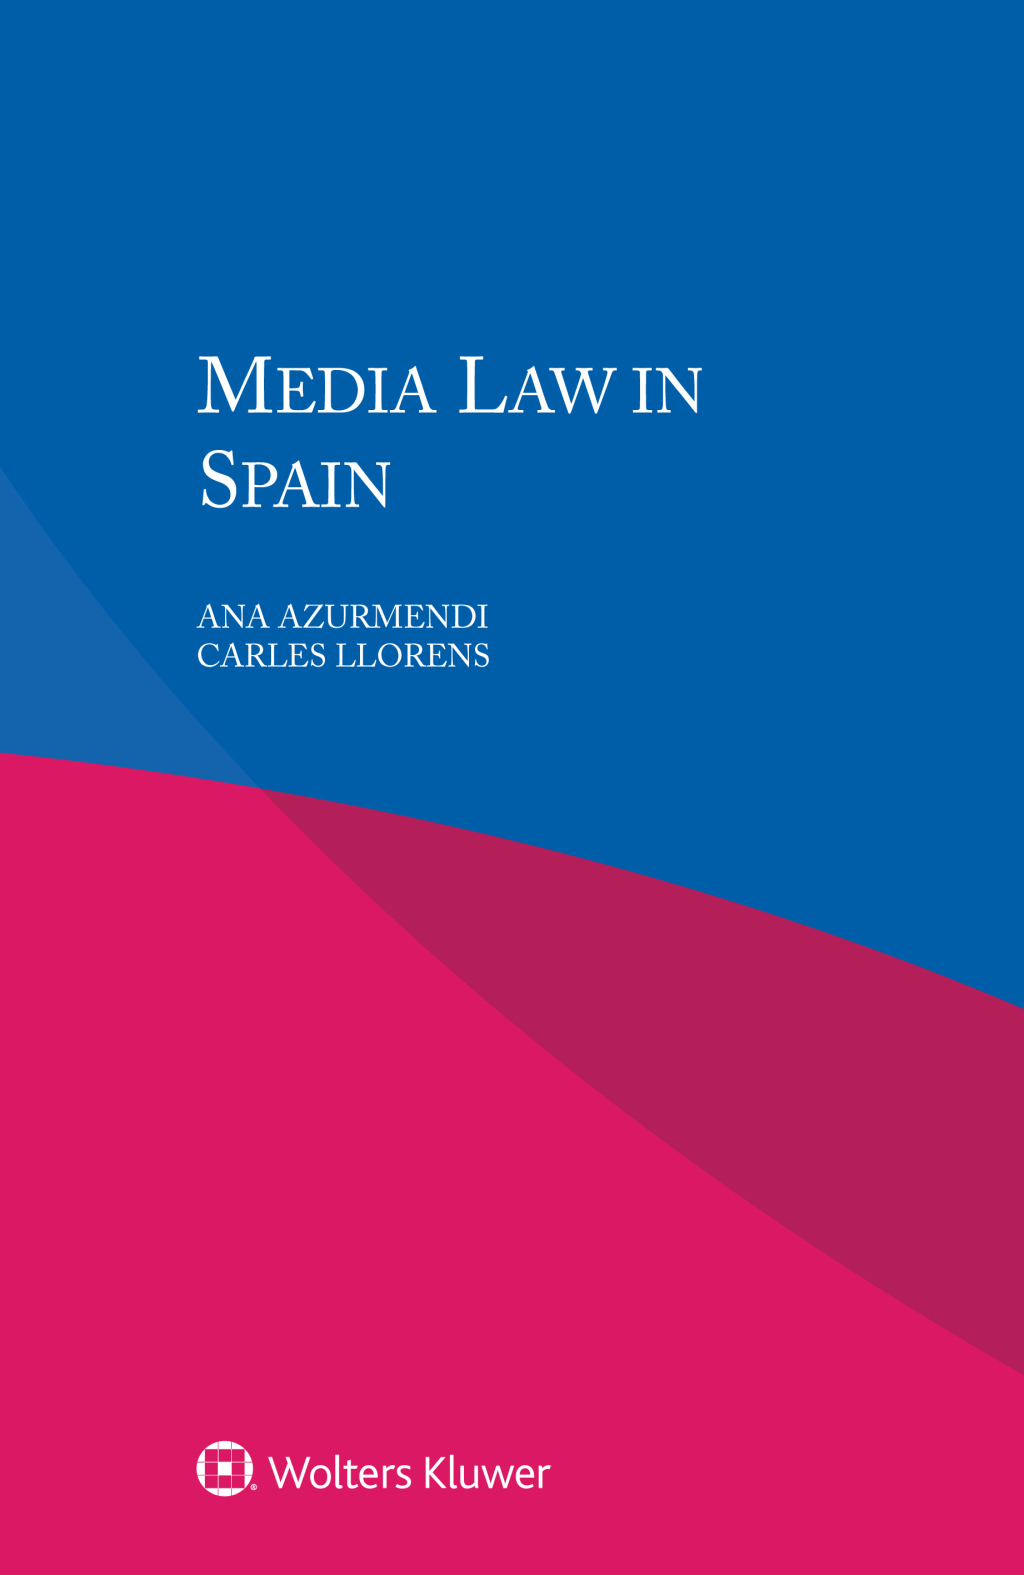 ISBN 9789403503103 product image for Media Law in Spain (eBook Rental) | upcitemdb.com